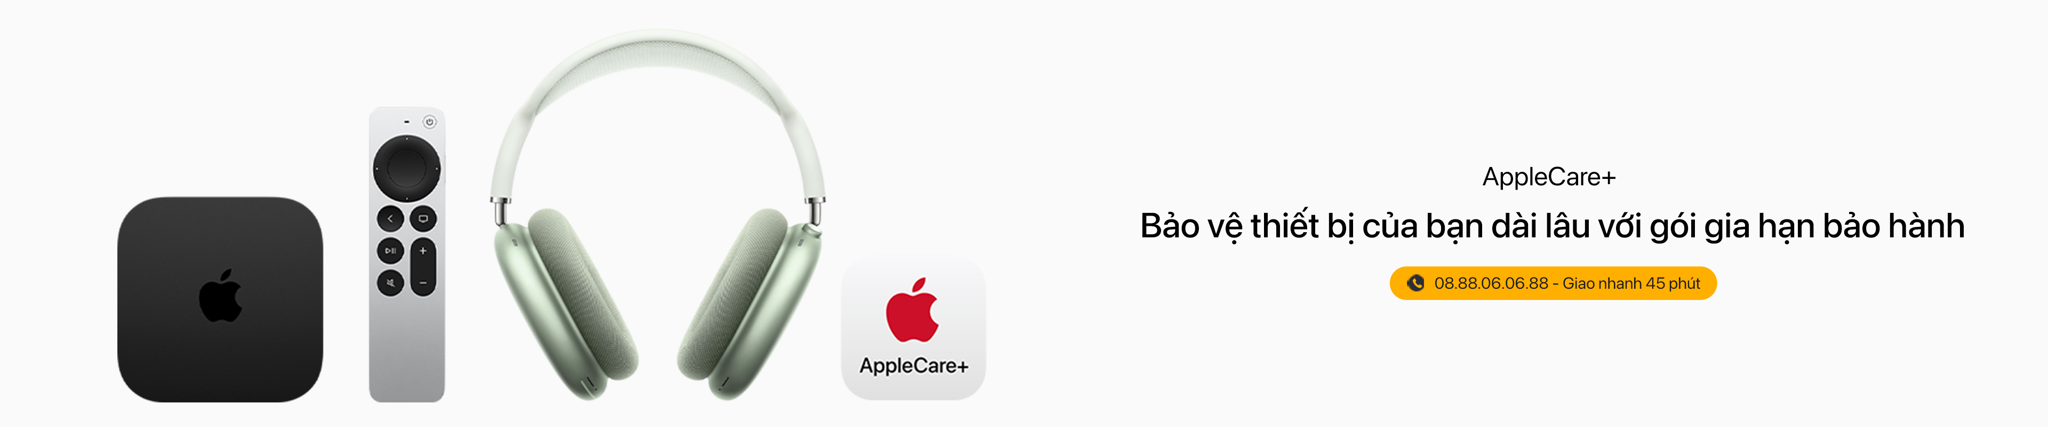 AppleCare+ Accessories